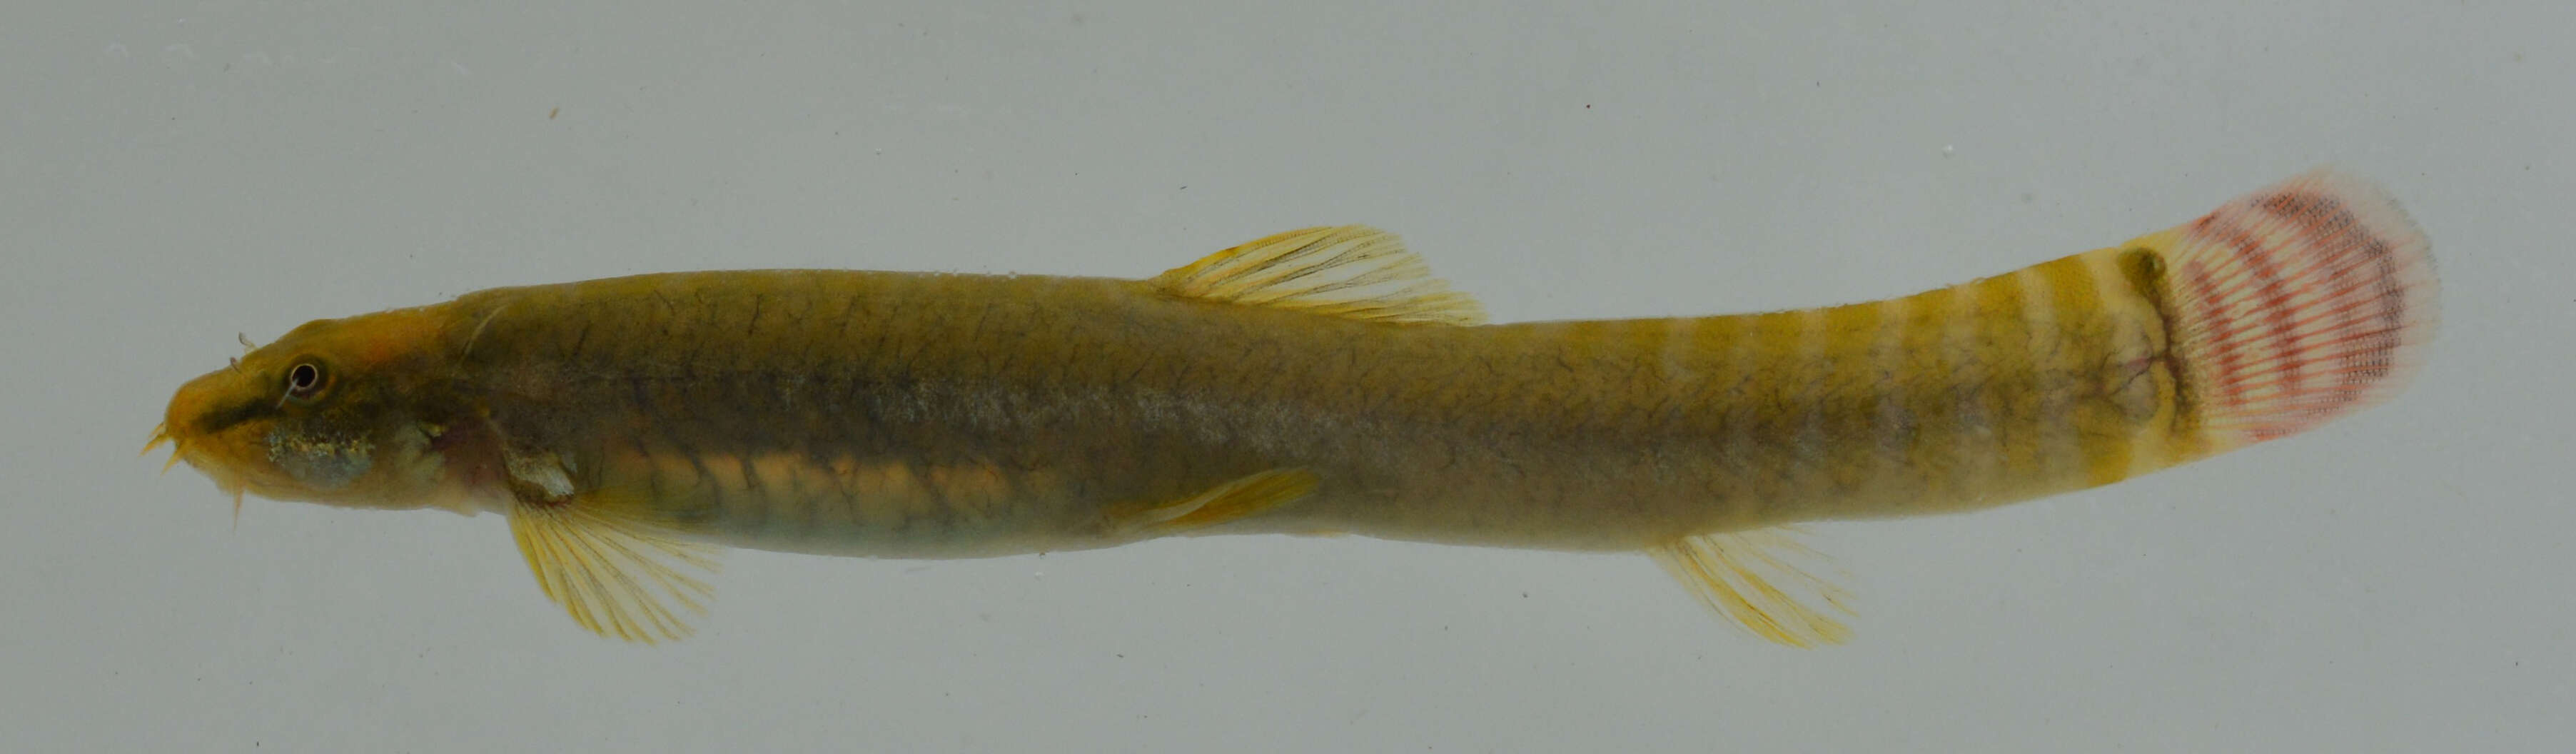 Image of Nemacheilidae